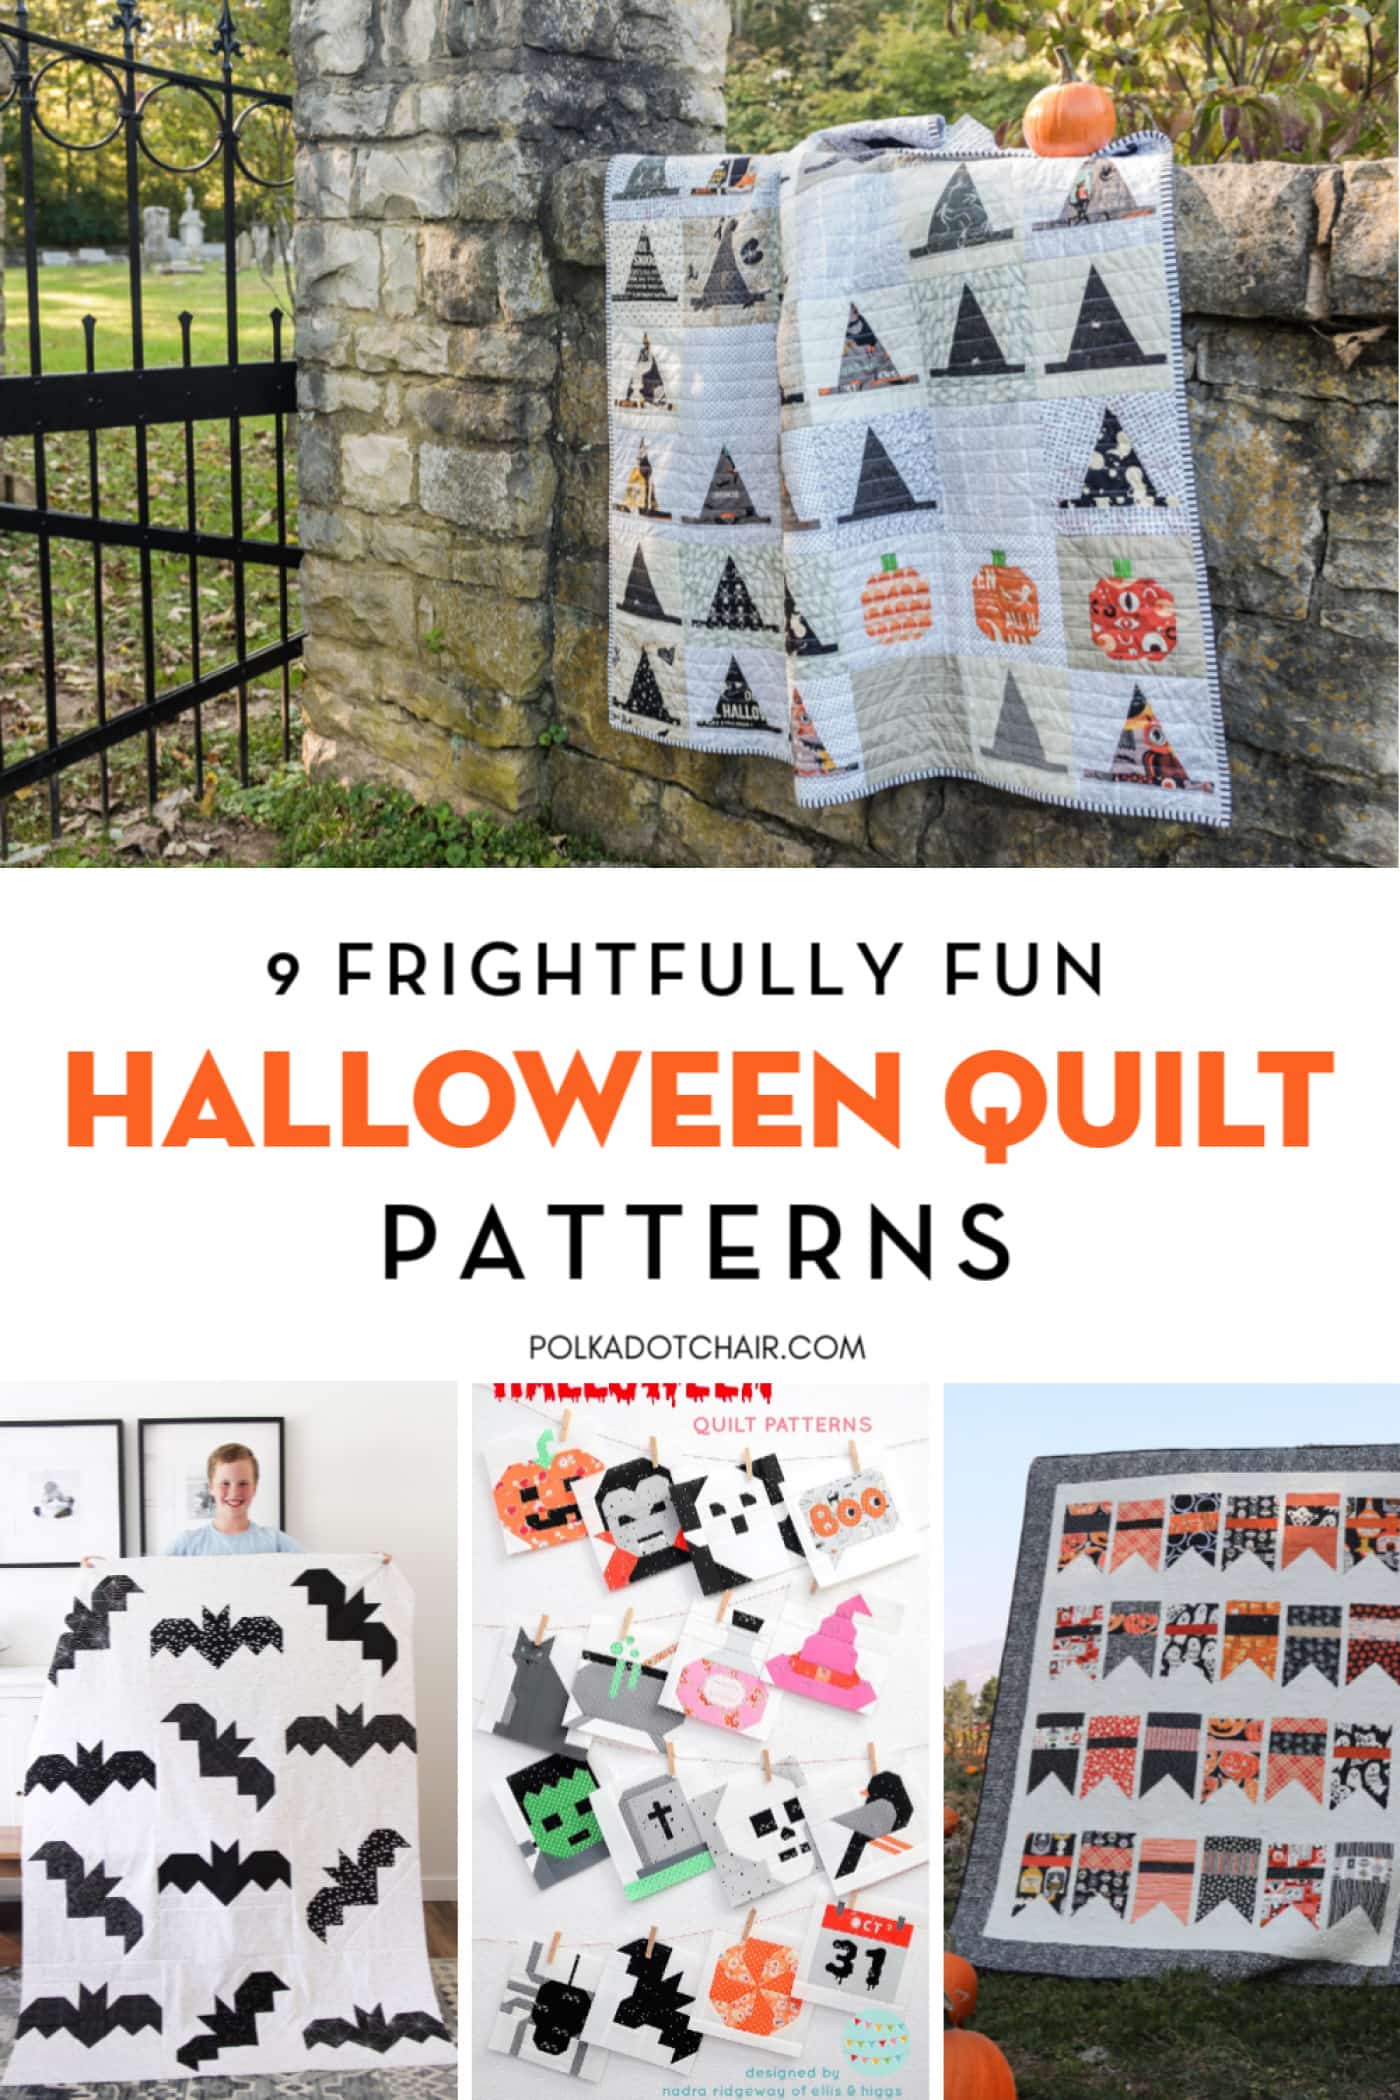 11 Frightfully Fun Halloween Quilt Patterns